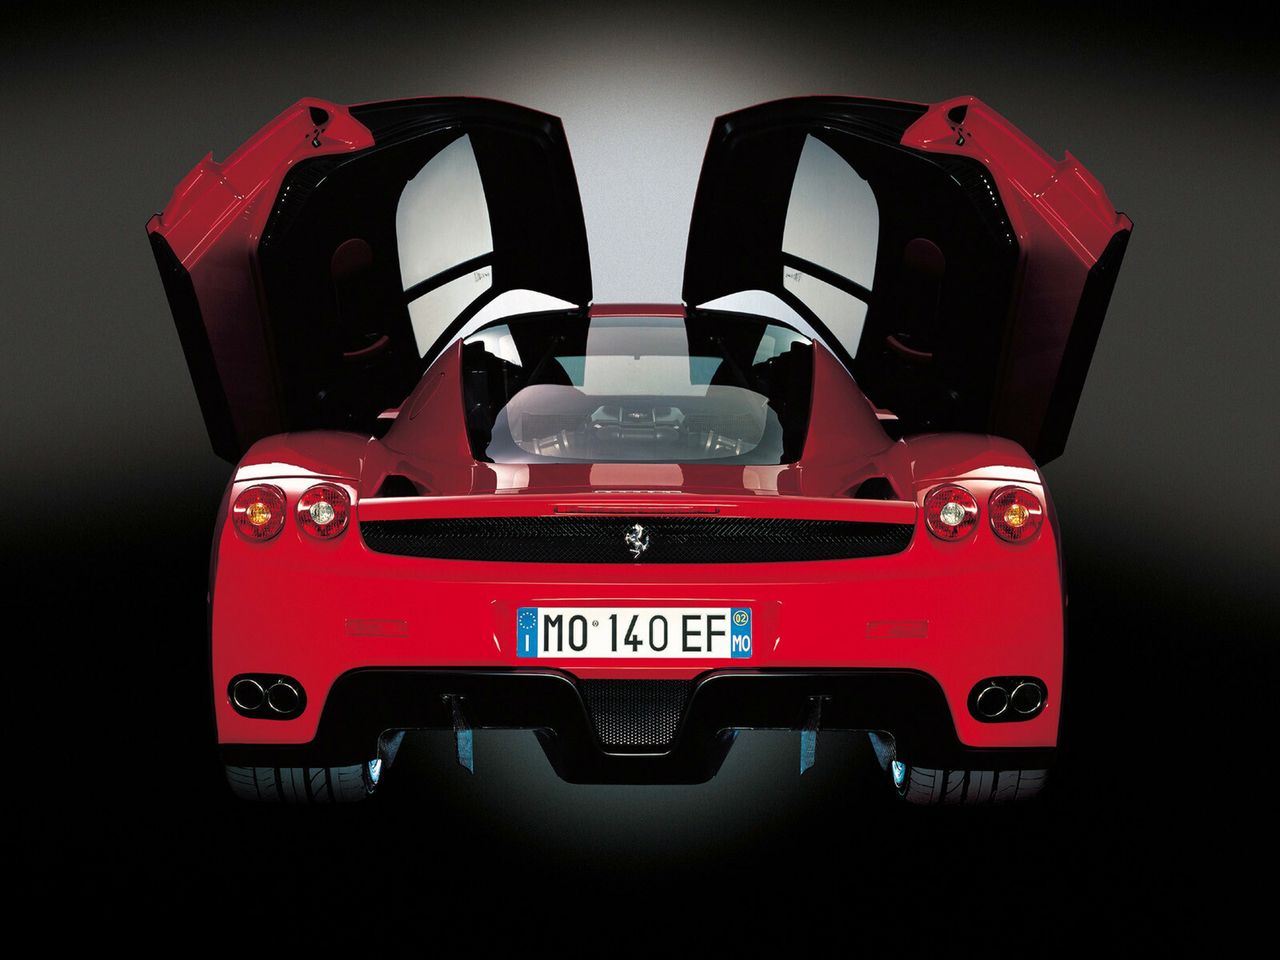 Ferrari Enzo (fot. kewlwallpapers.com)